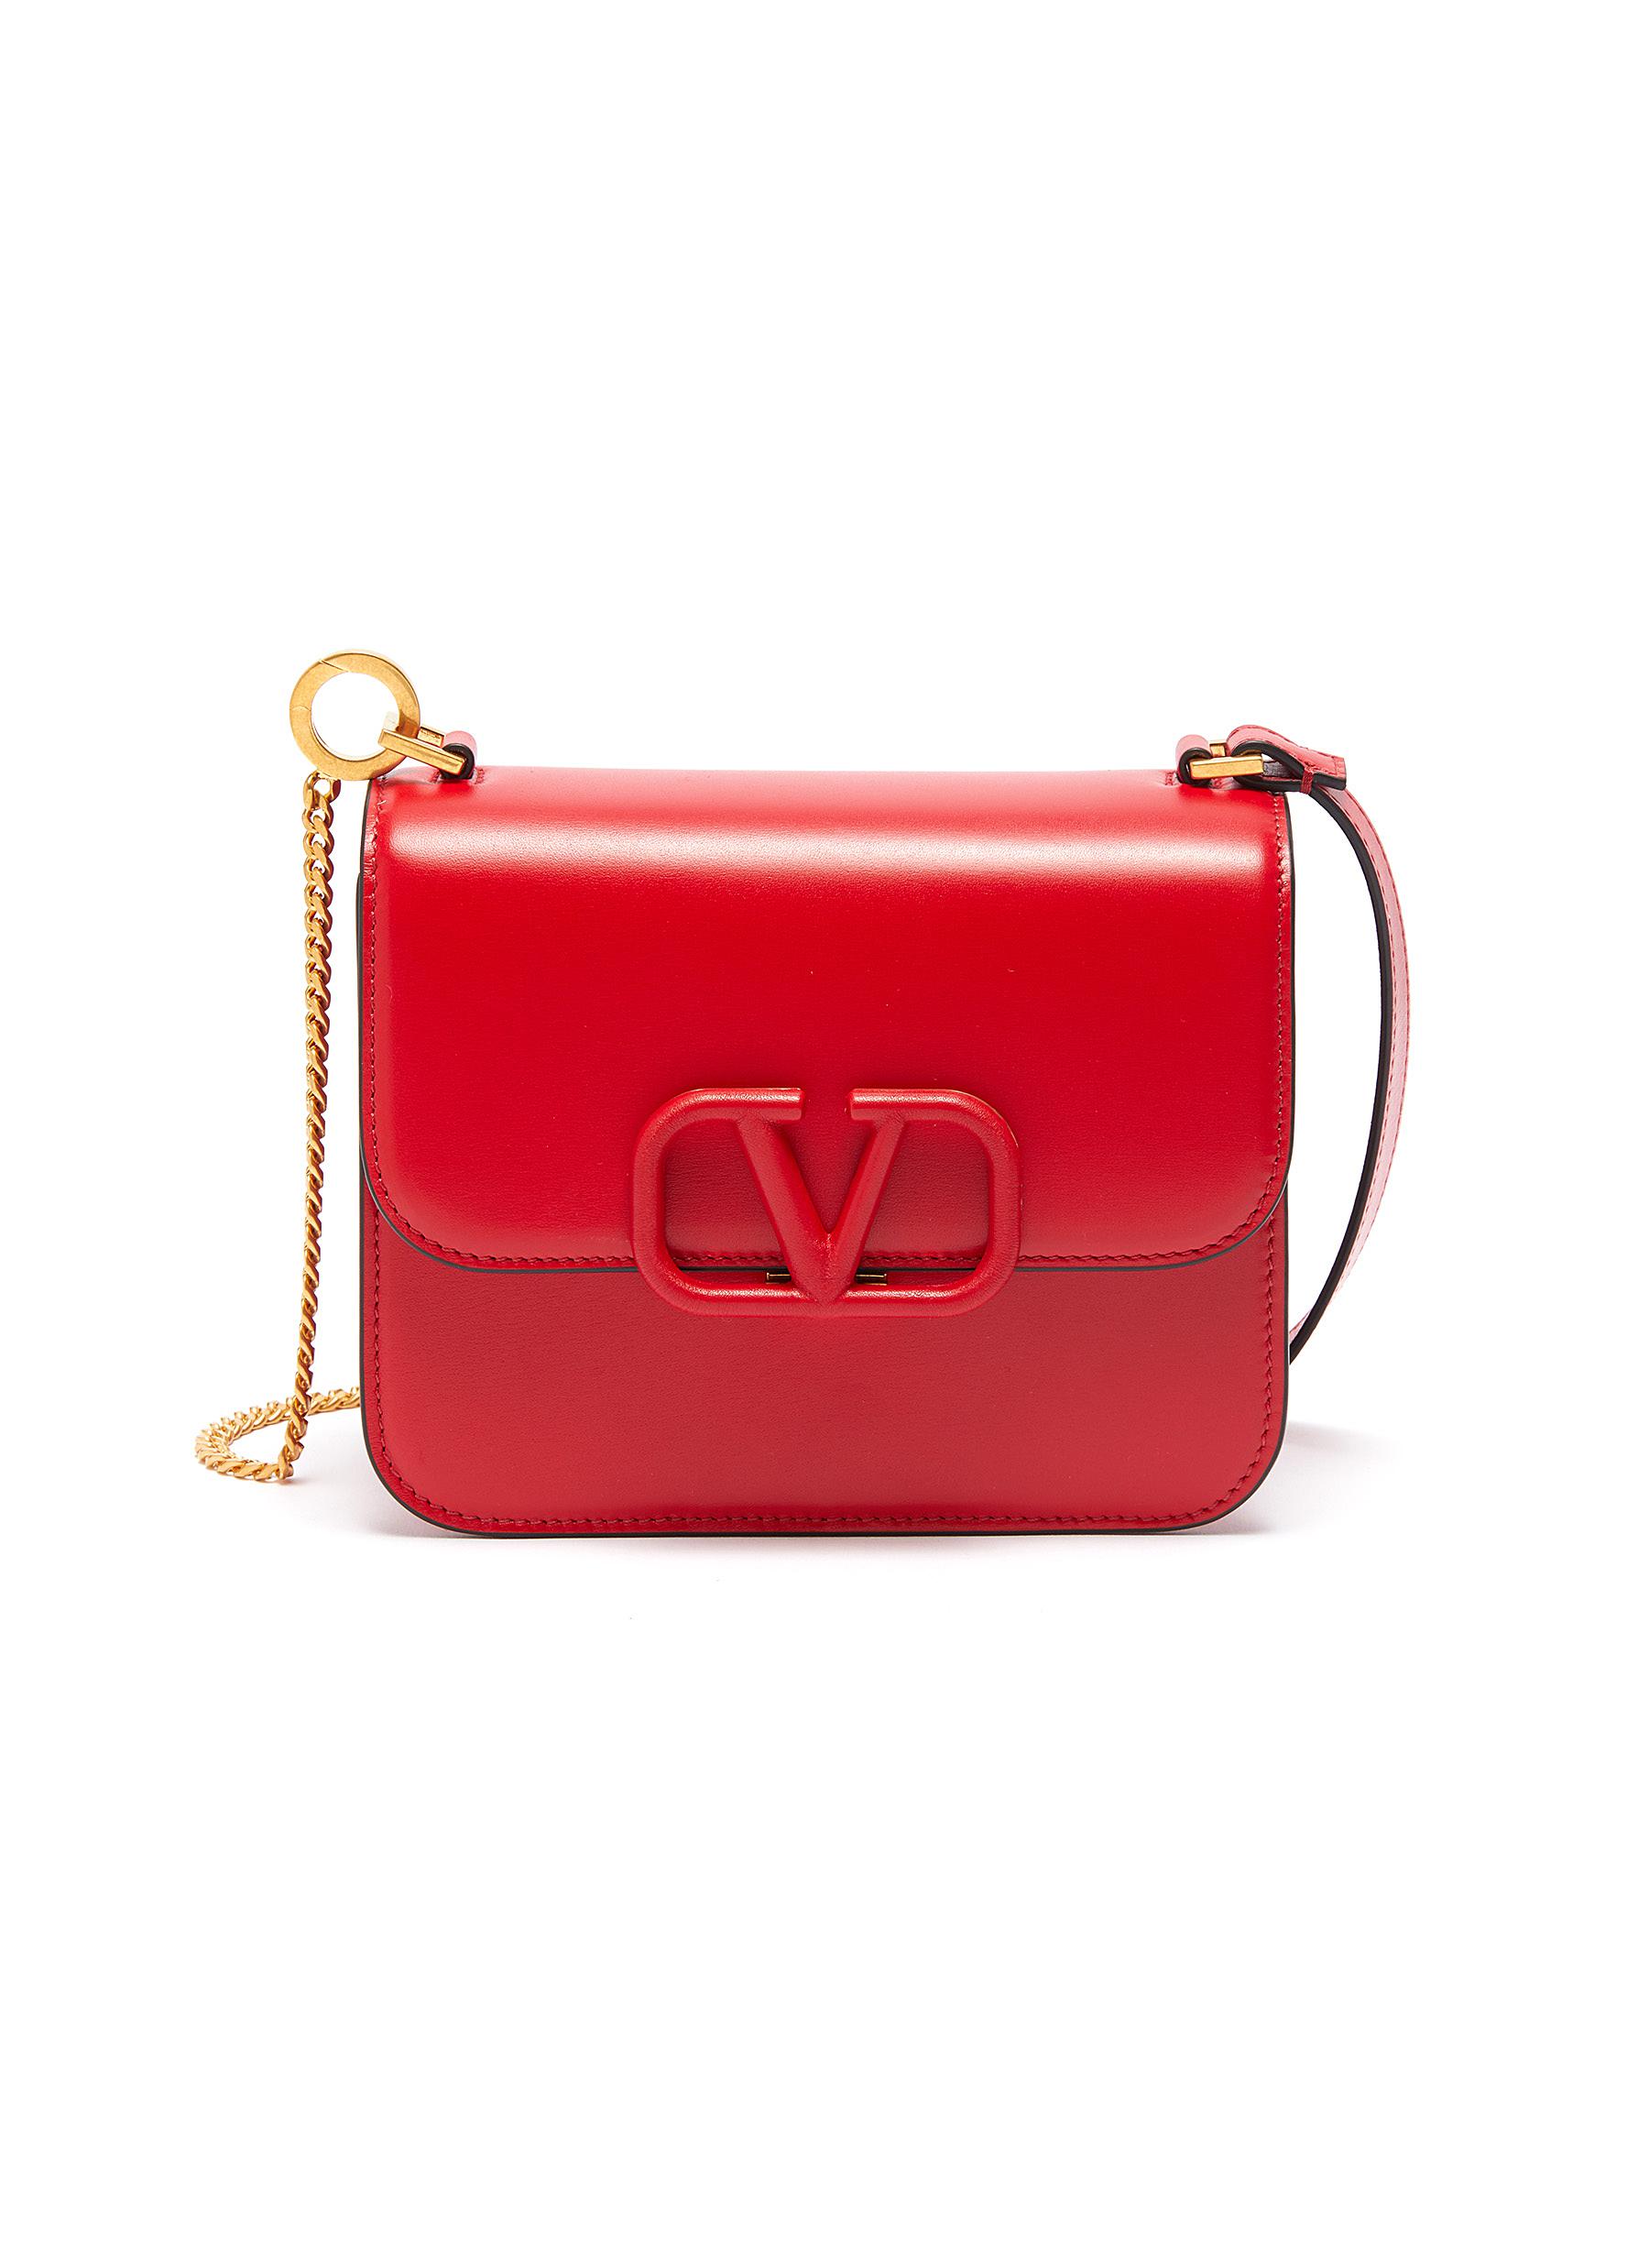 Valentino Red Bag Sale Hotsell, 52% OFF | www.ingeniovirtual.com